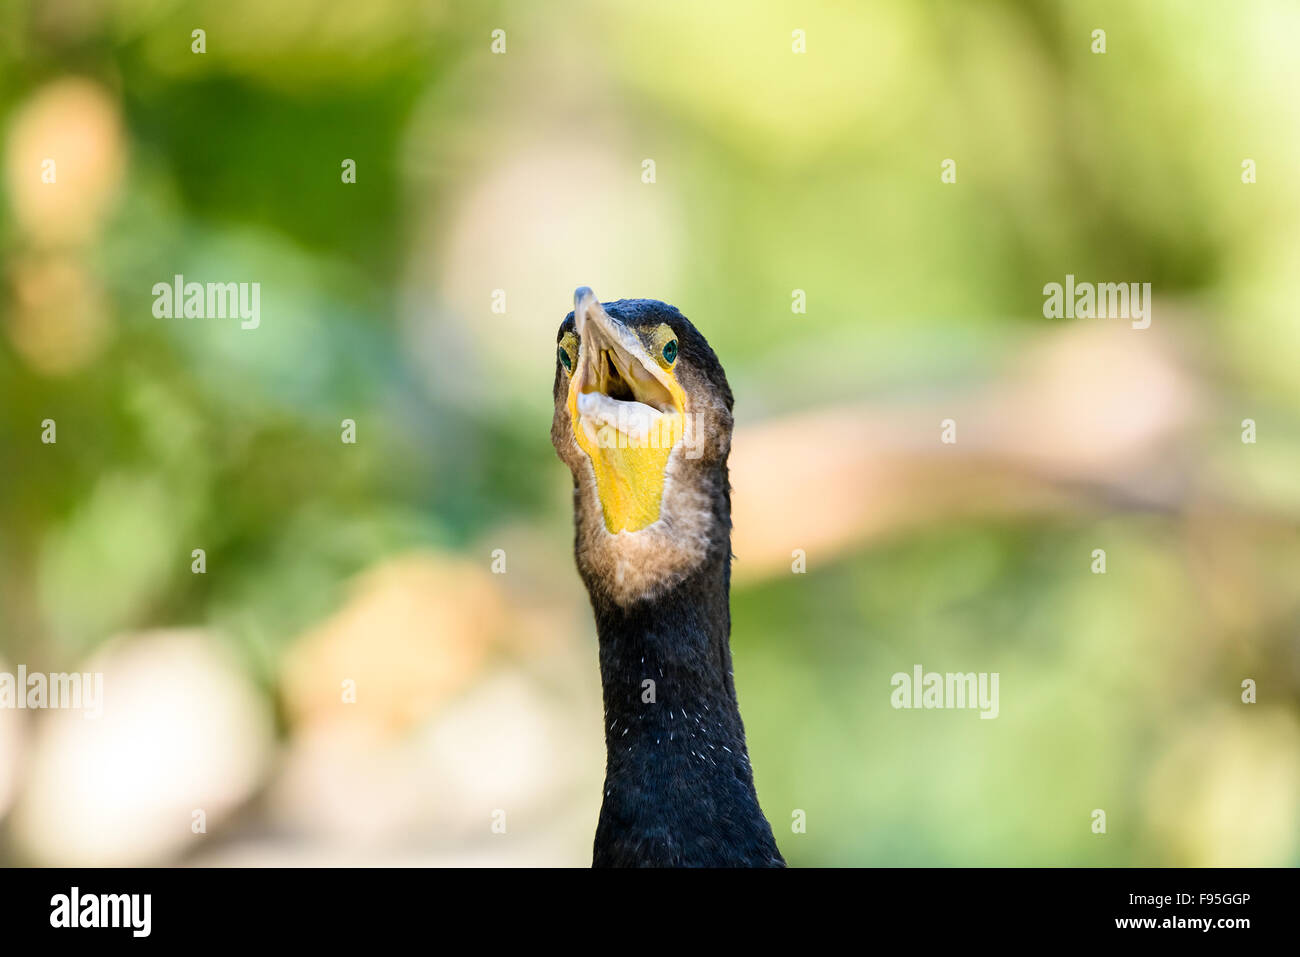 Black Cormorant Sea Bird Portrait Stock Photo